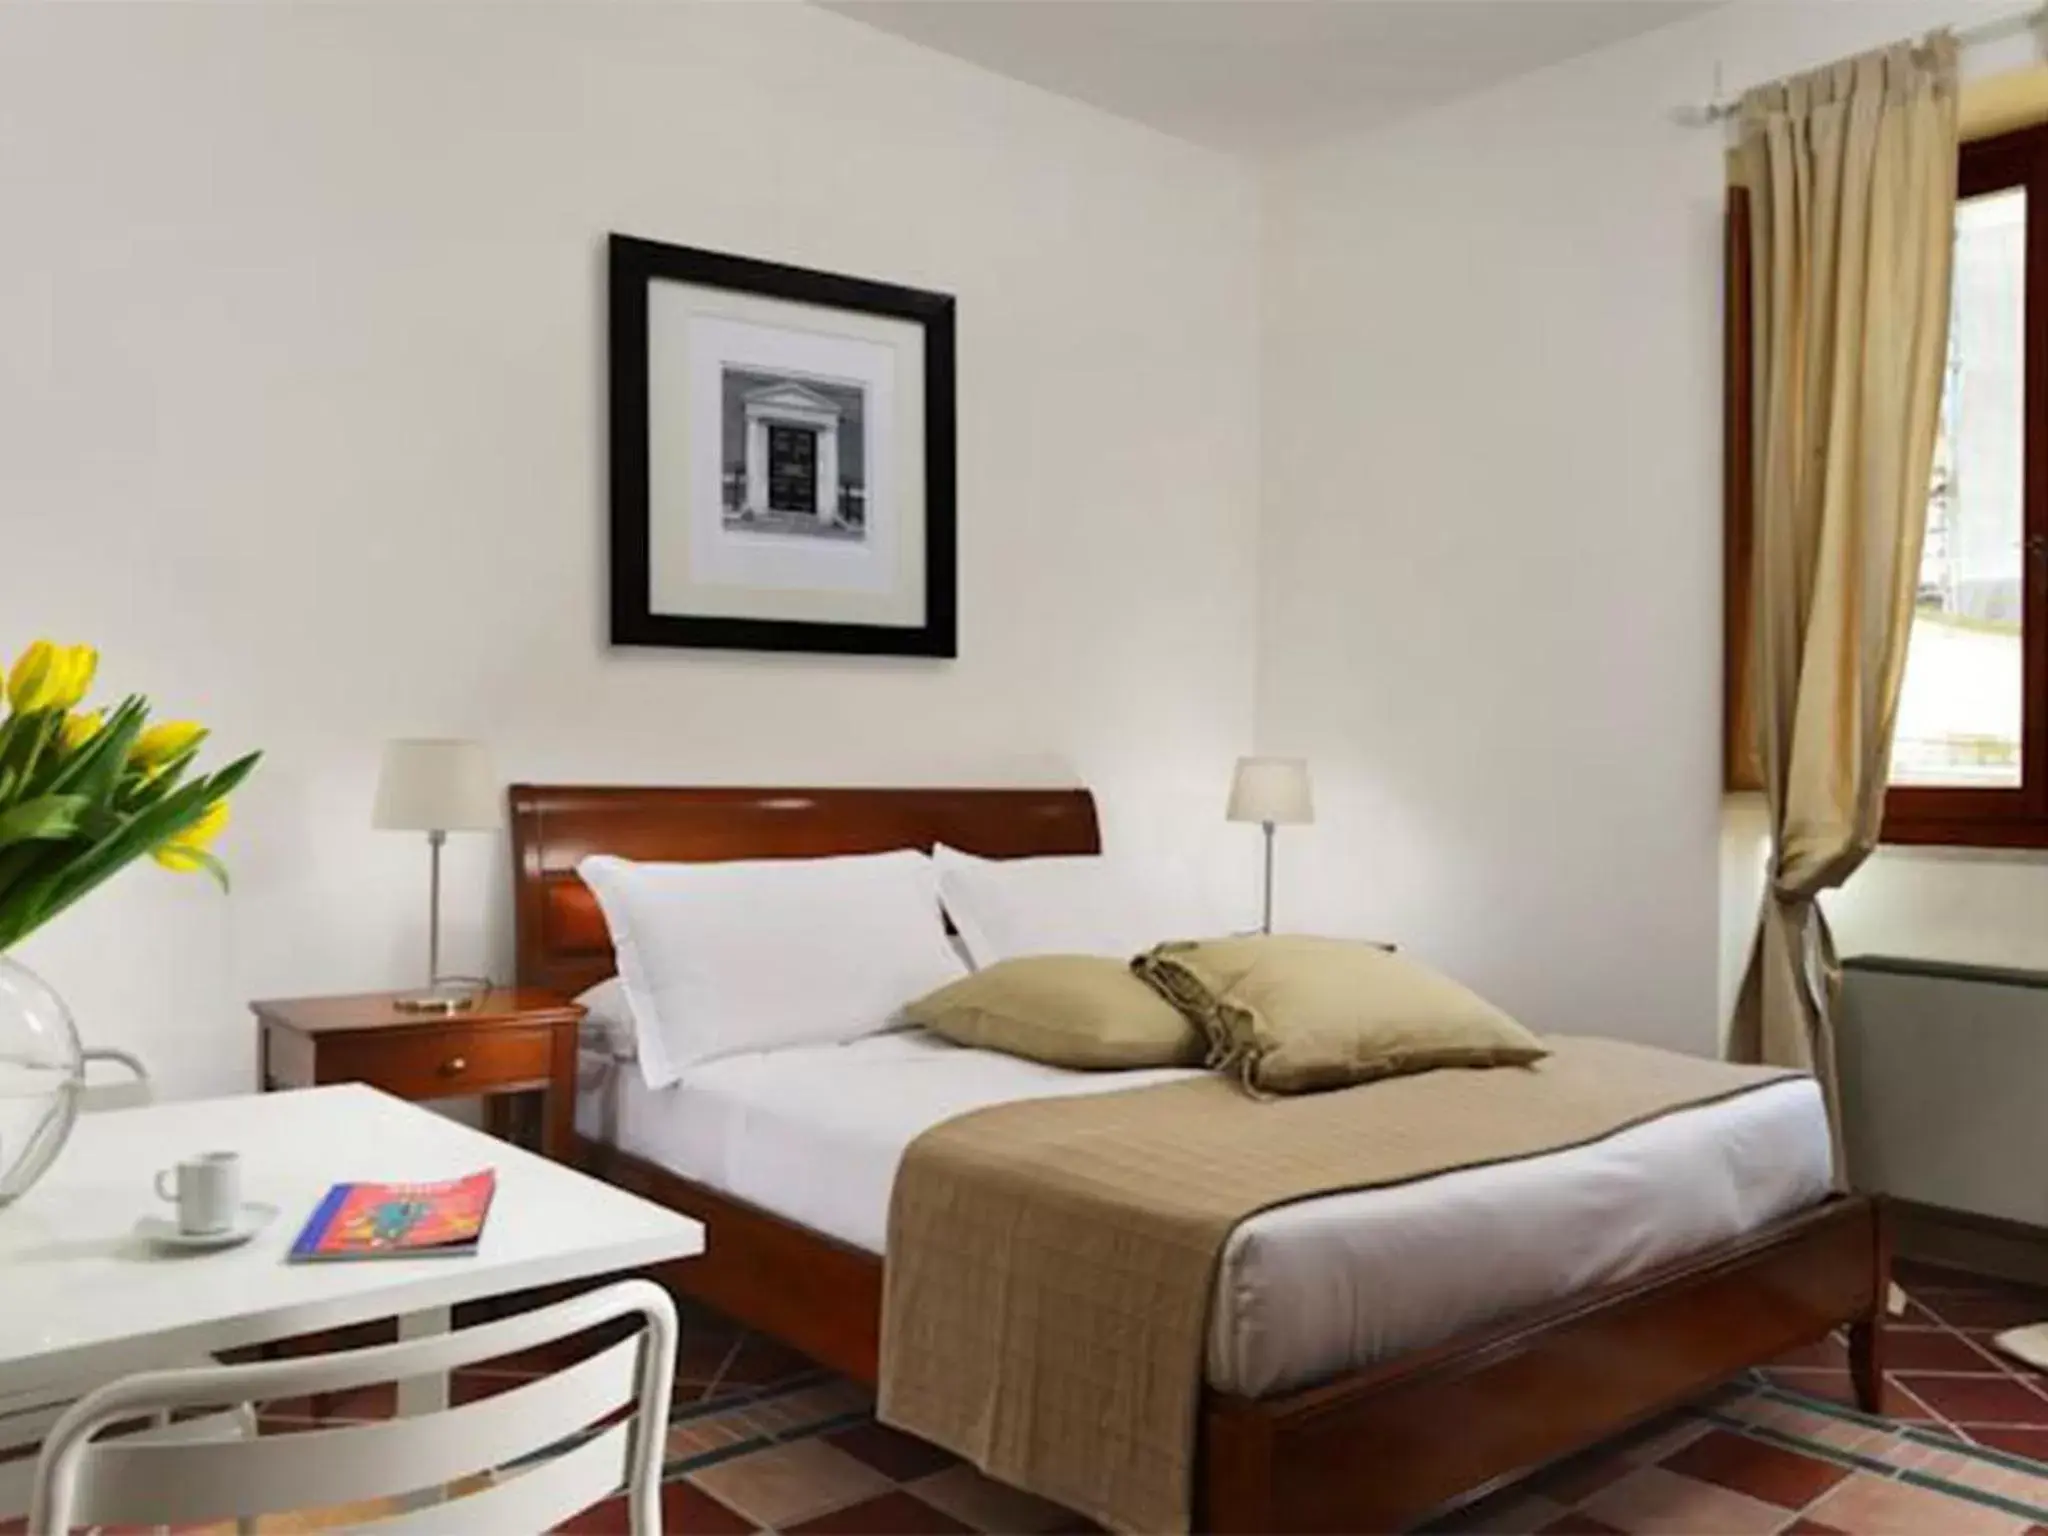 Bed in Roma Resort Termini